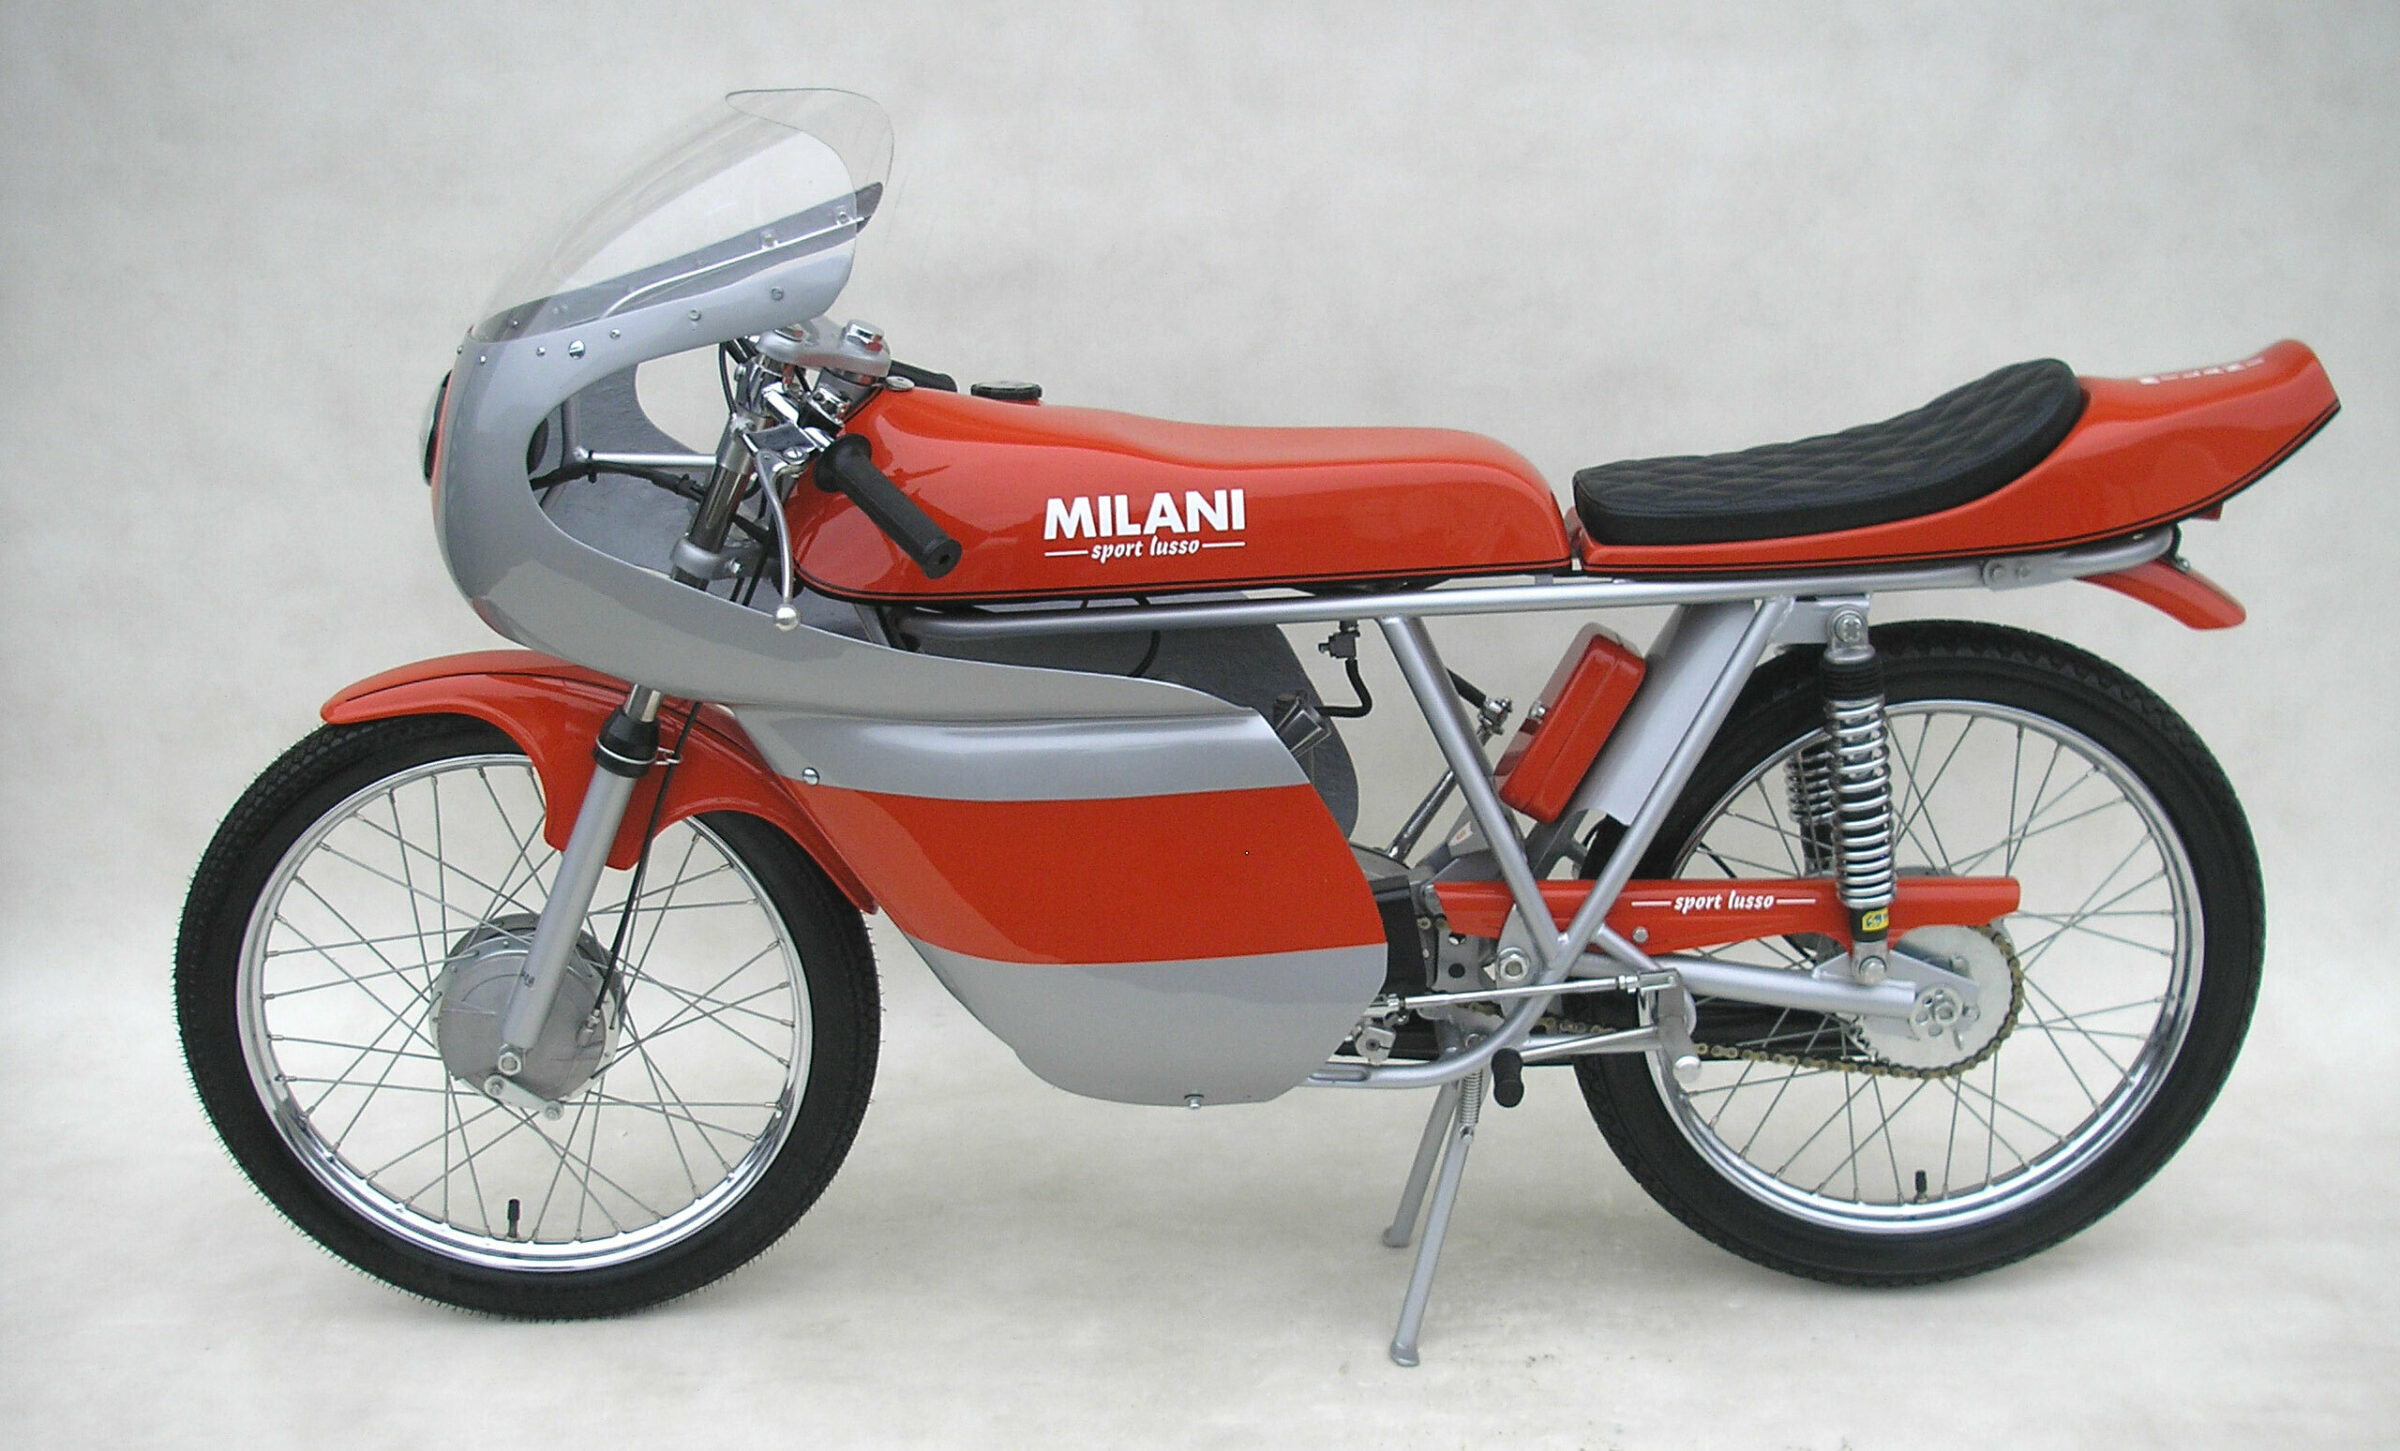 Milani sport lusso 1972 2